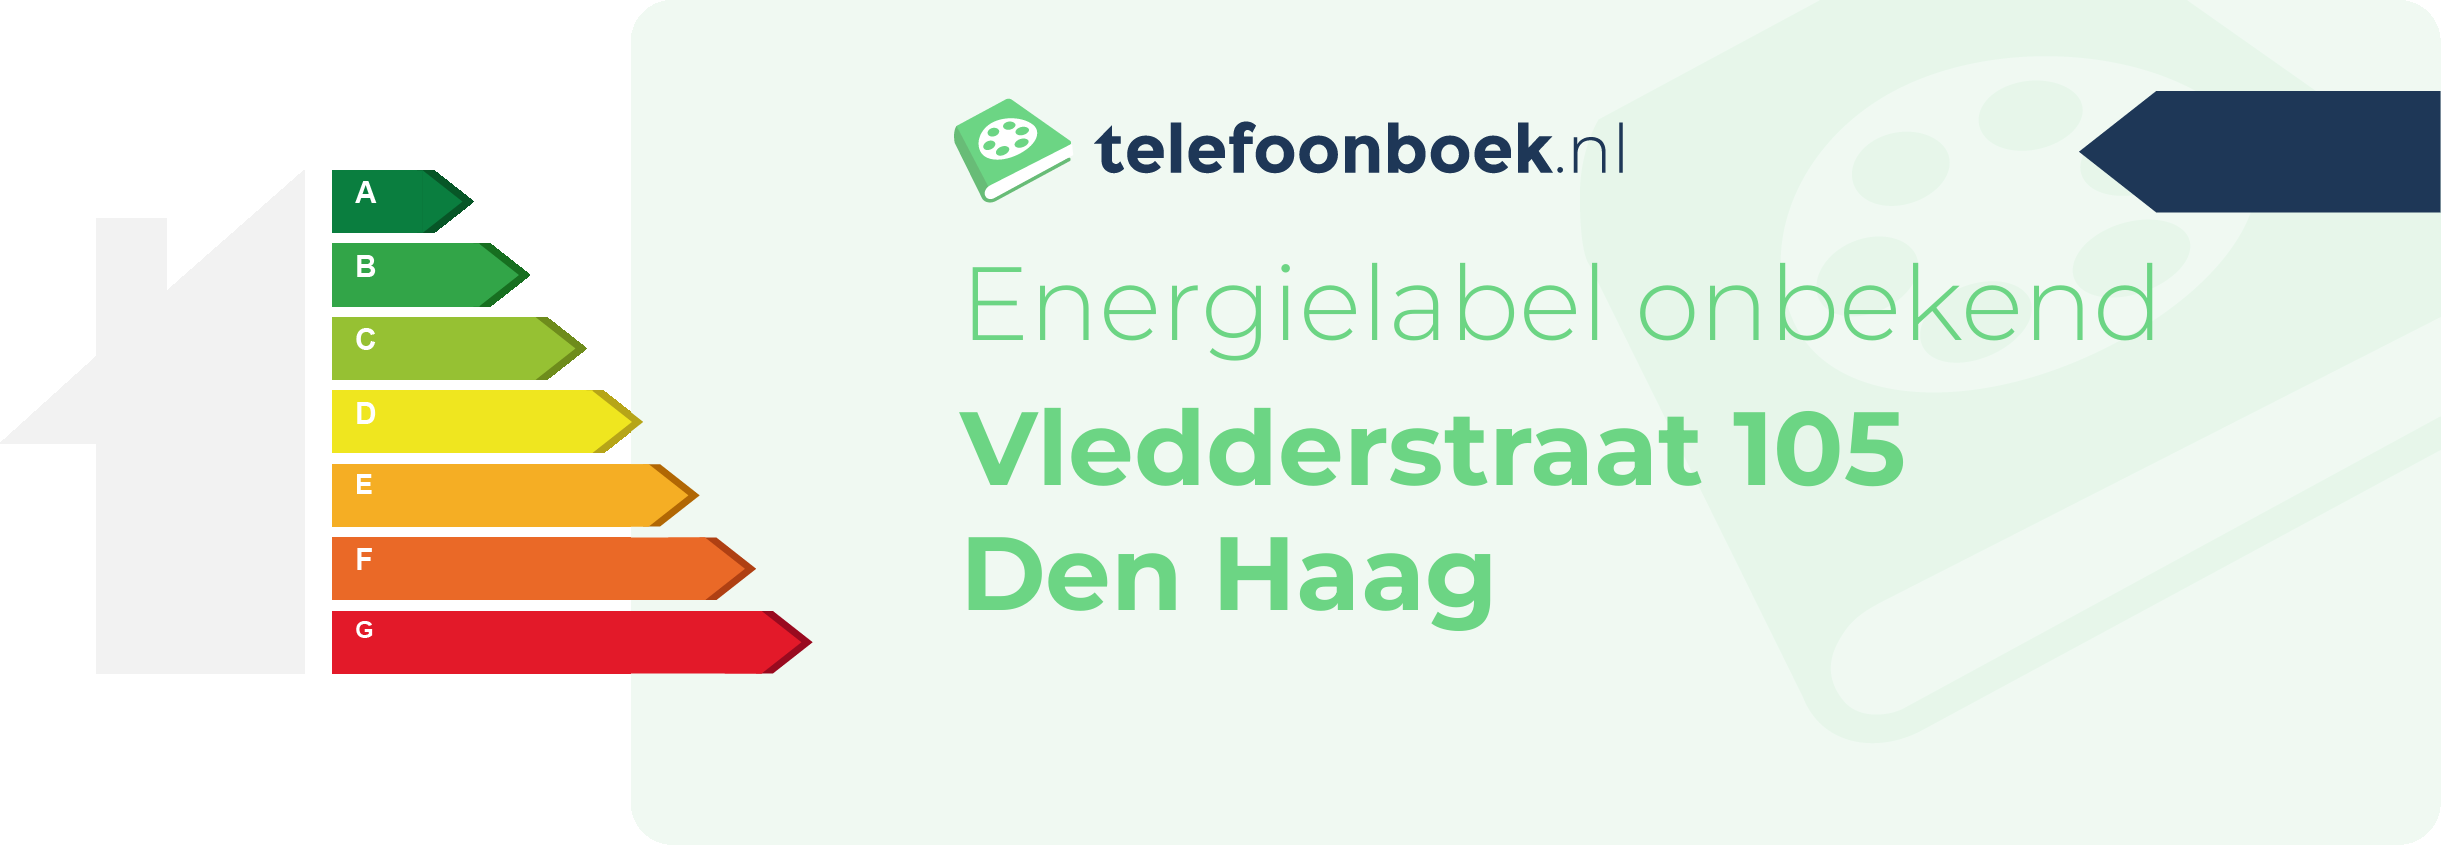 Energielabel Vledderstraat 105 Den Haag